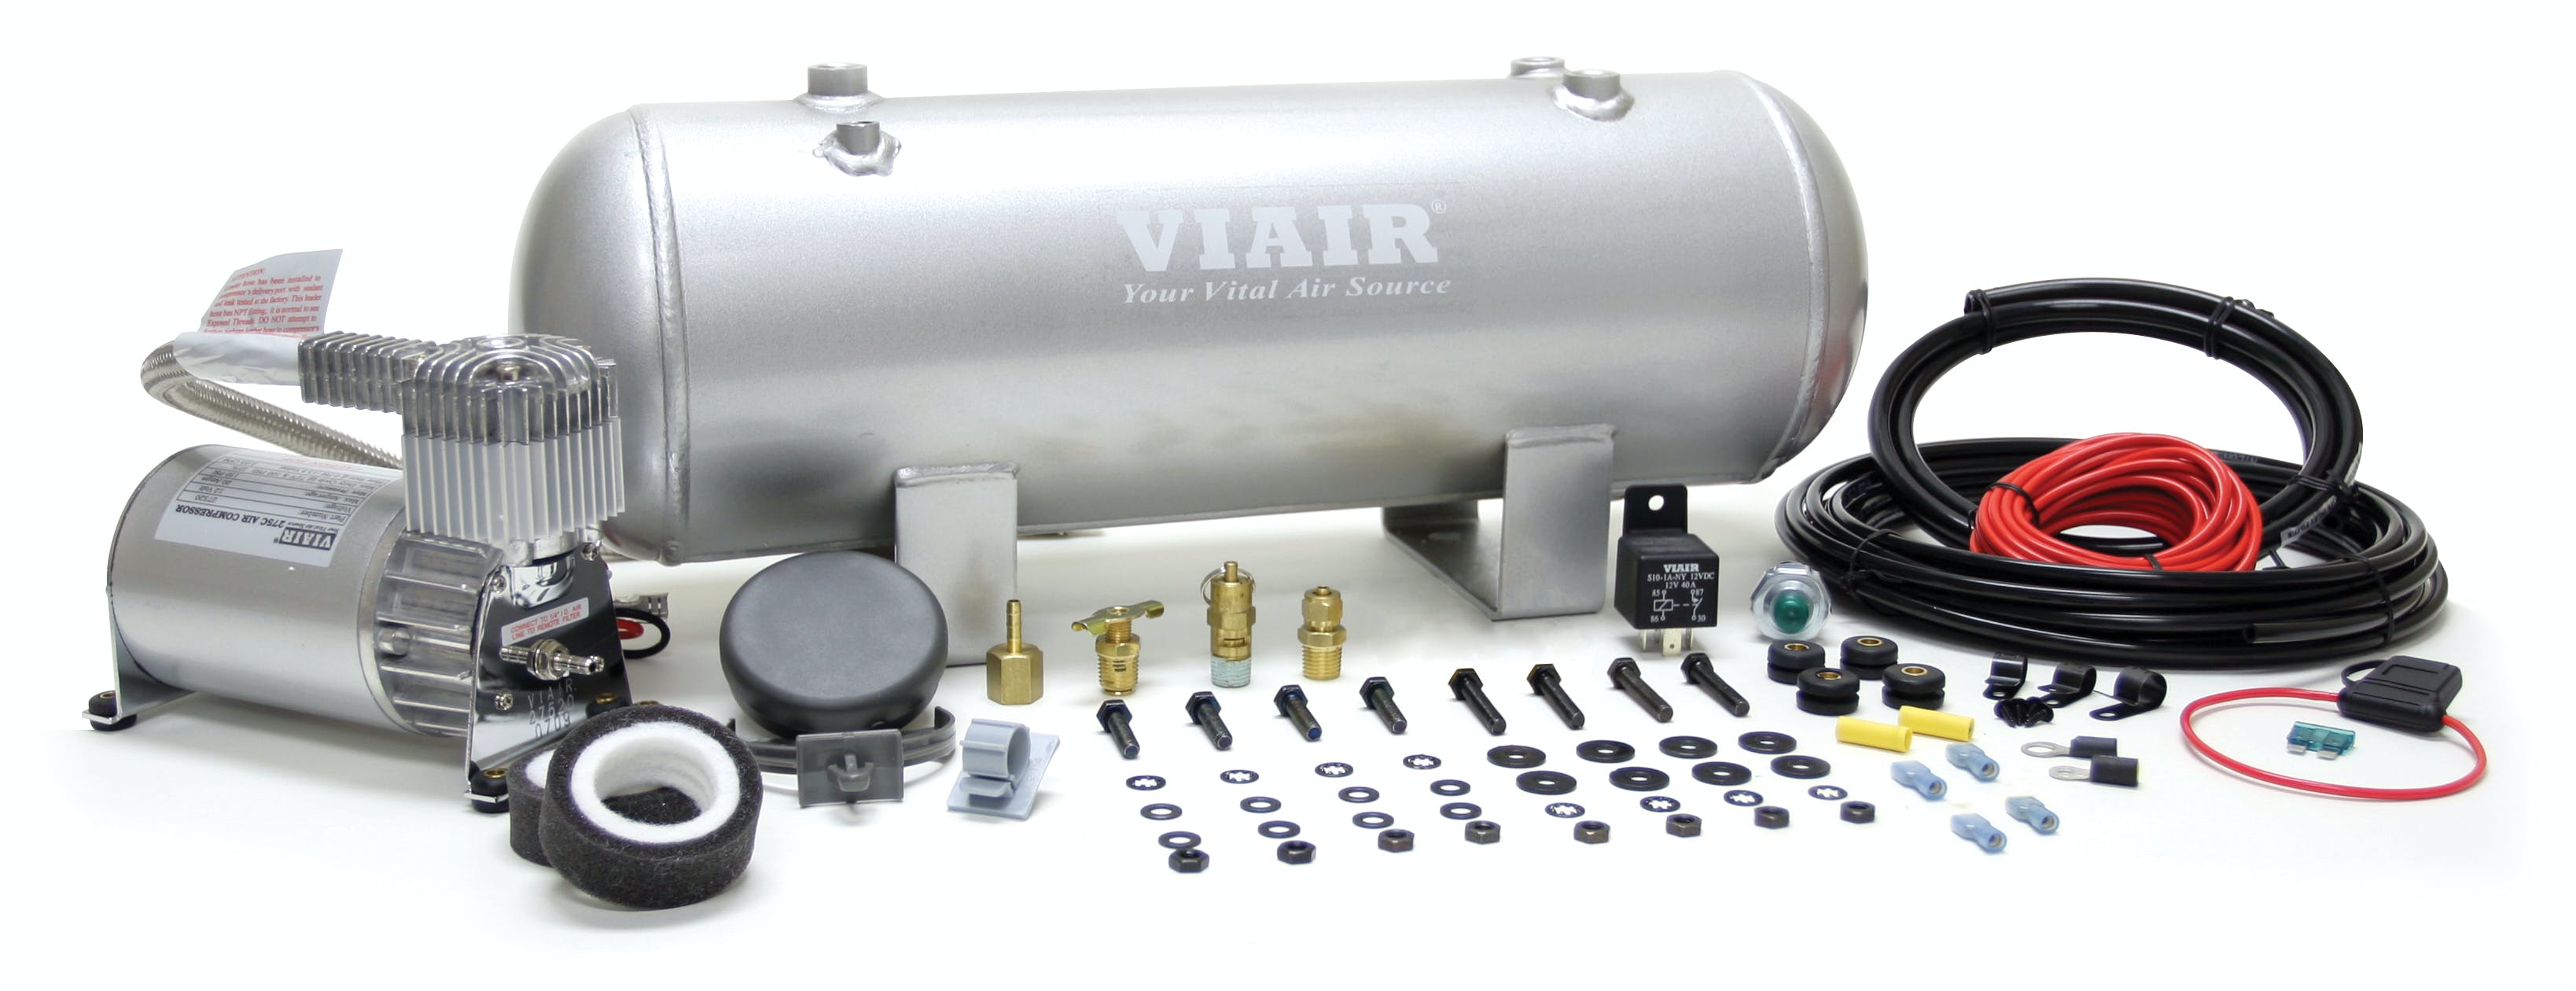 VIAIR 10002 Quarter Duty Onboard Air System 150 PSI Compressor 12V 2.0 Gal. Tank